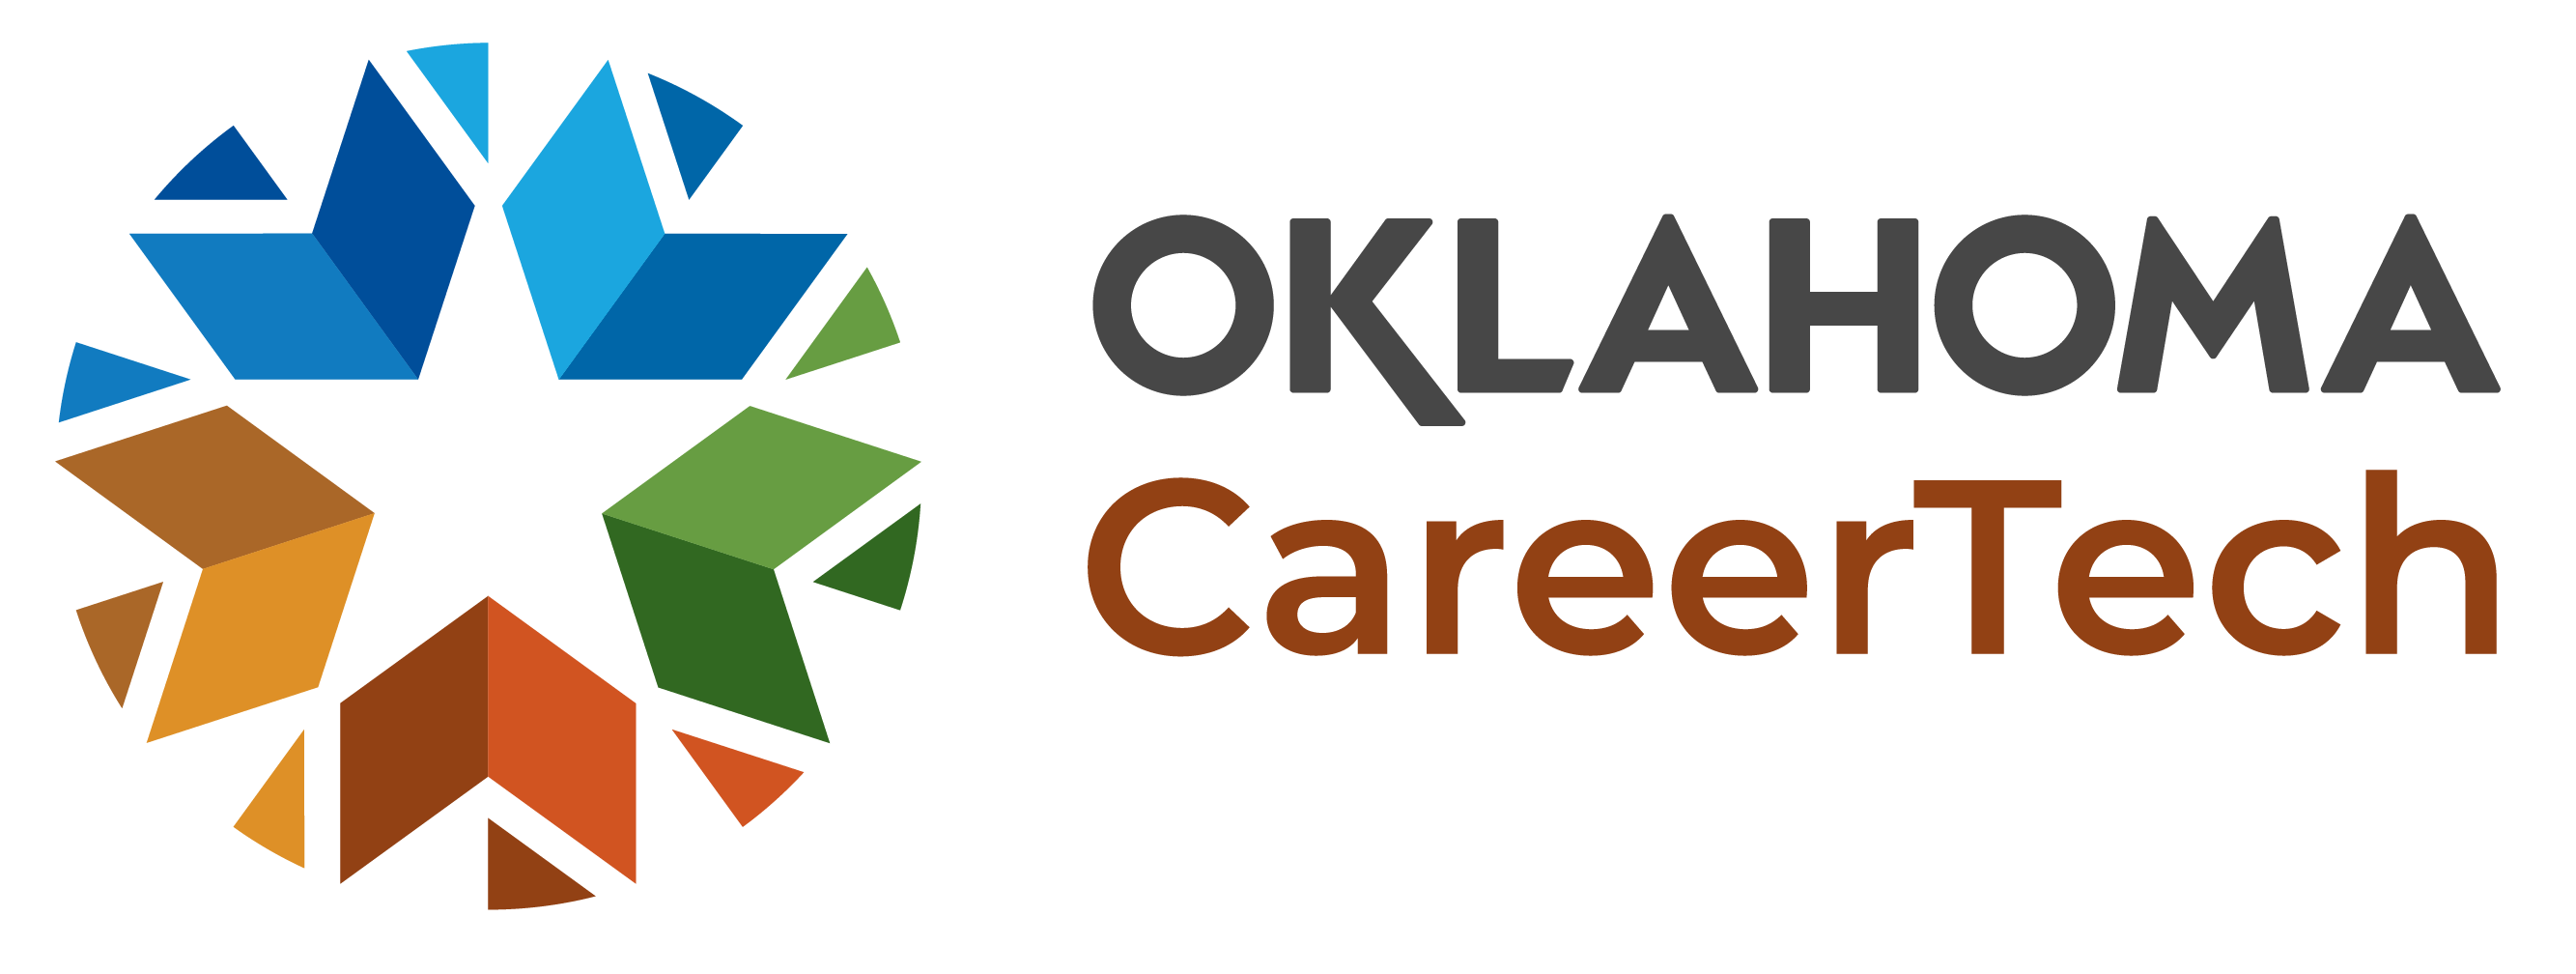 Oklahoma Career Tech